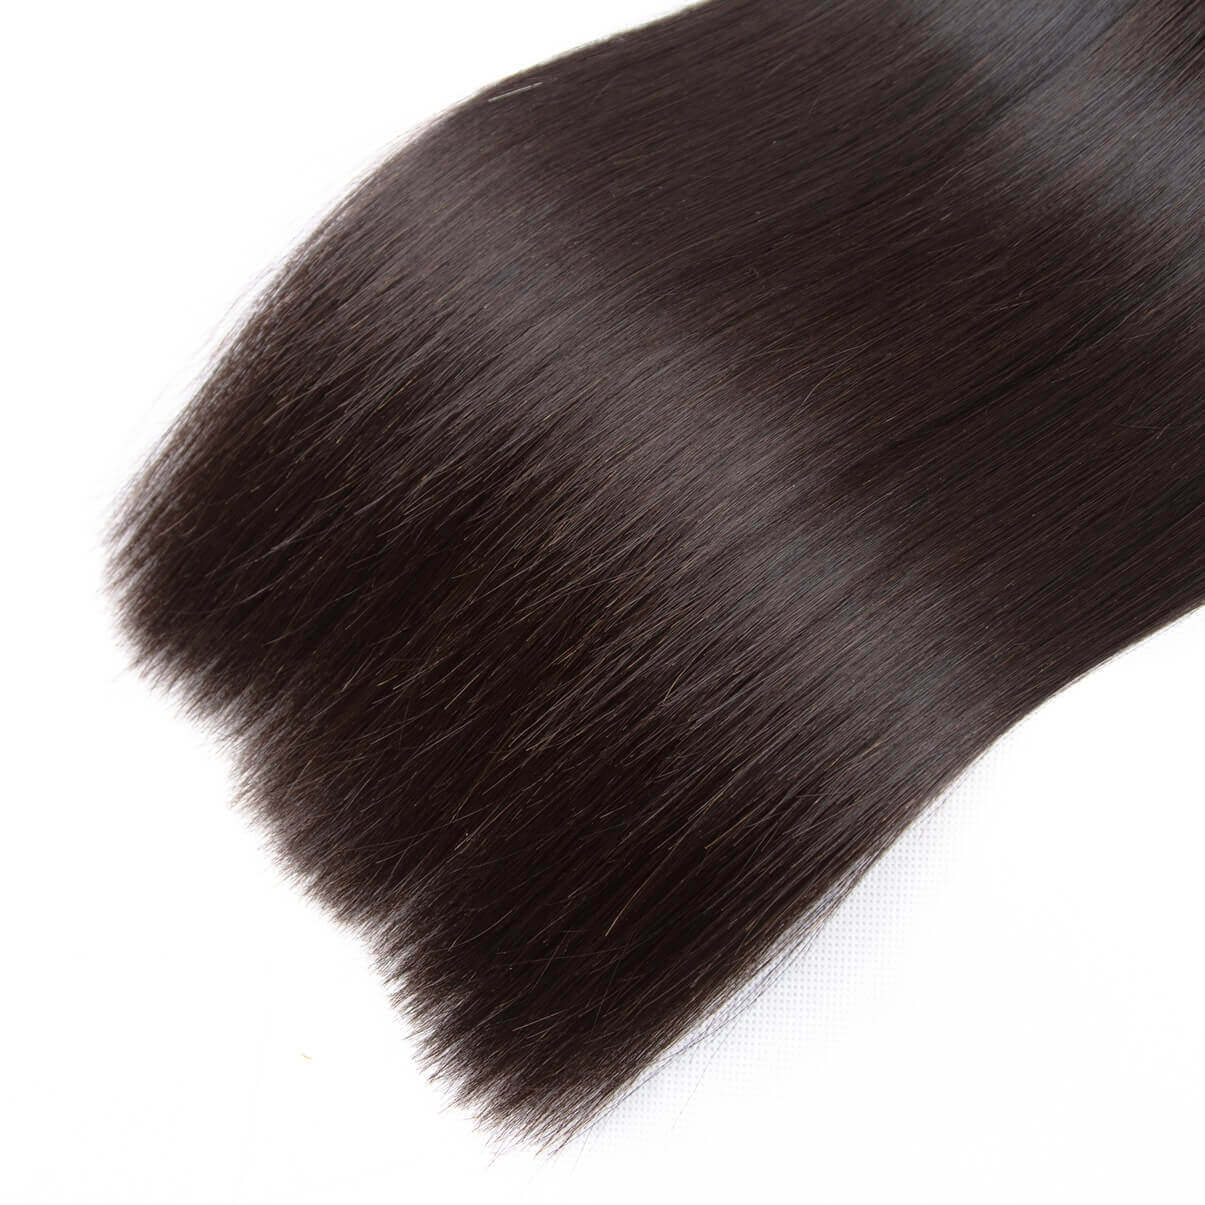 Lakihair 8A Brazilian Virgin Human Hair Straight Hair 3 Bundles With 13x4 Lace Frontal Closure